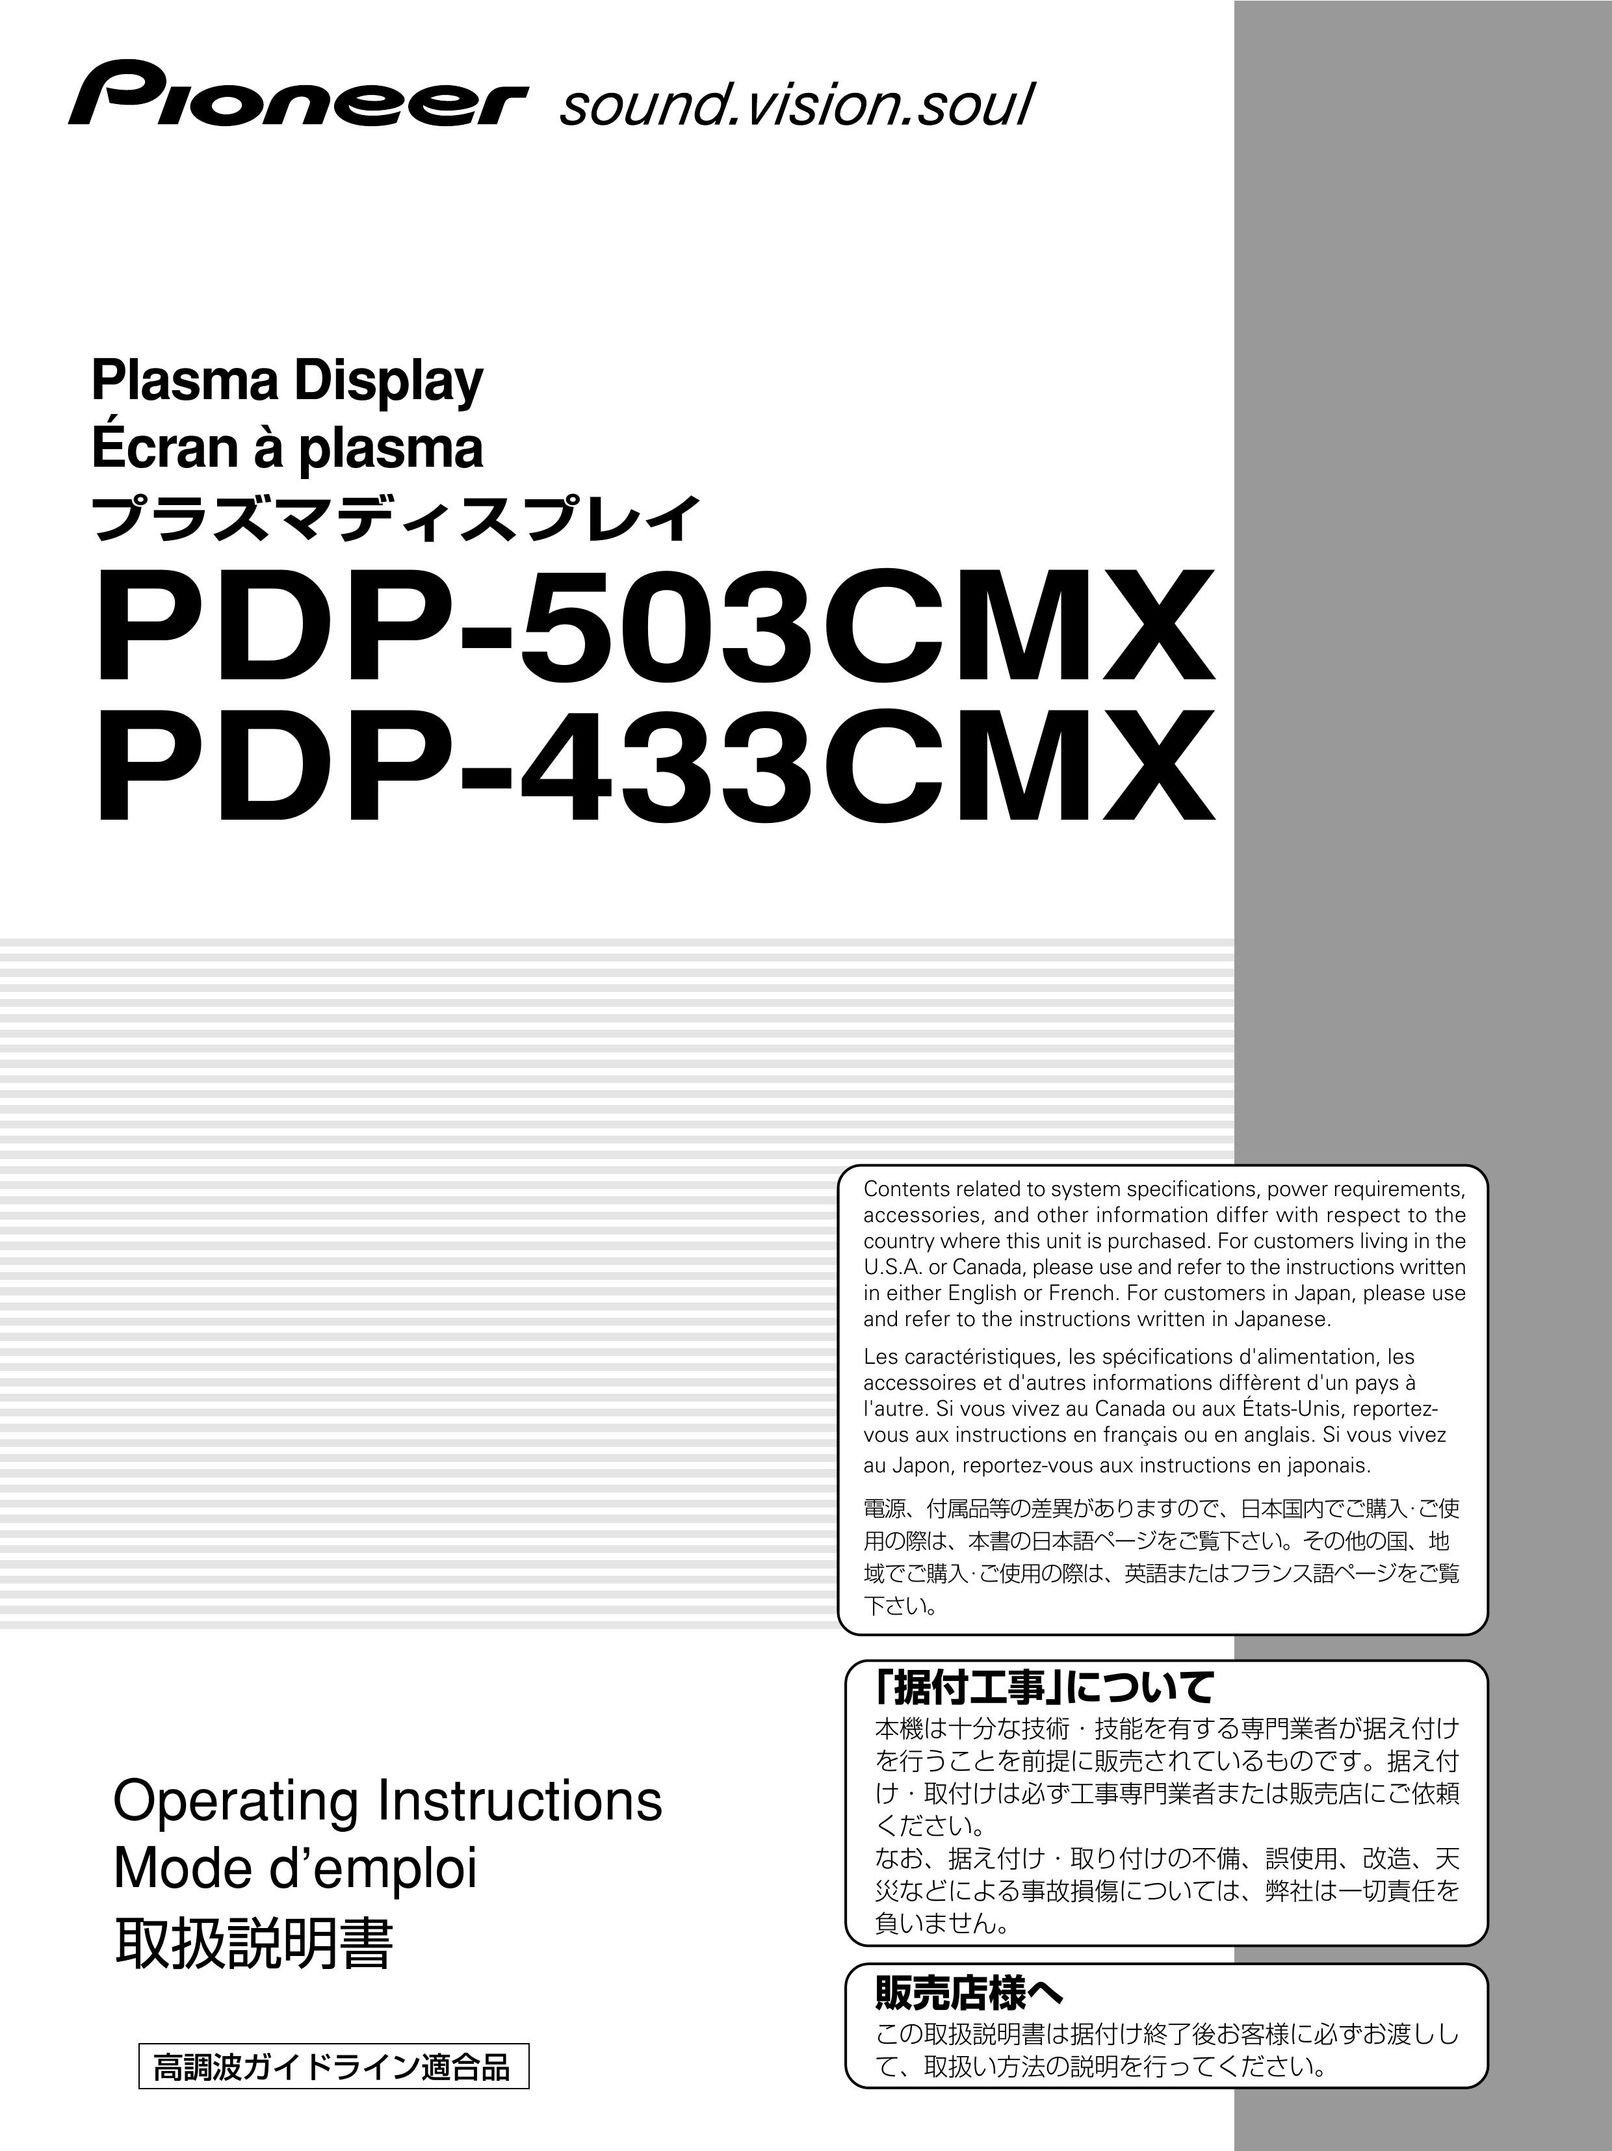 Pioneer PDP 433CMX Flat Panel Television User Manual